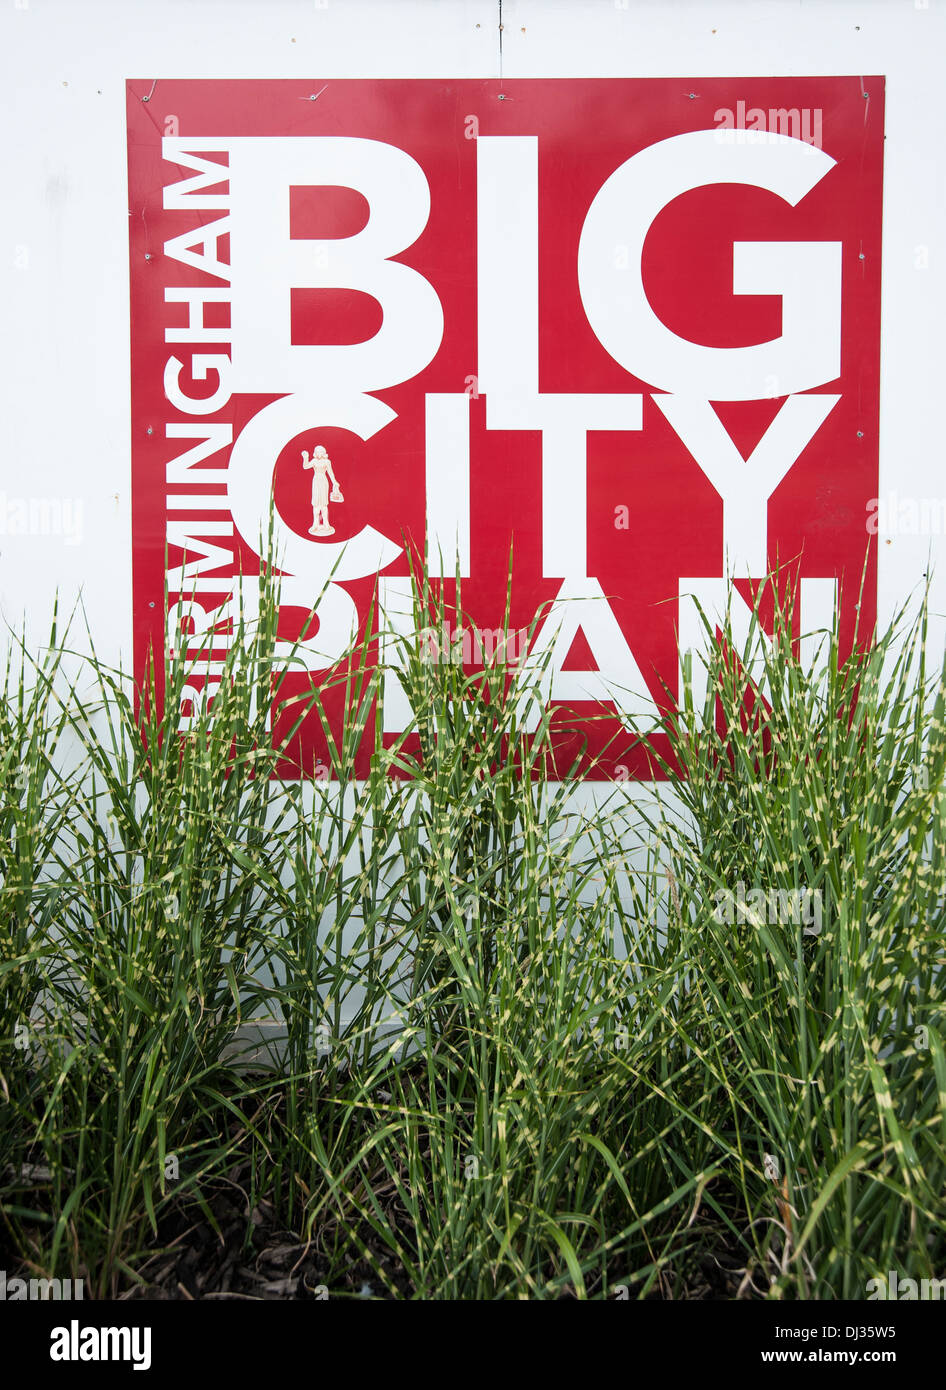 Birmingham Big City sign Stock Photo